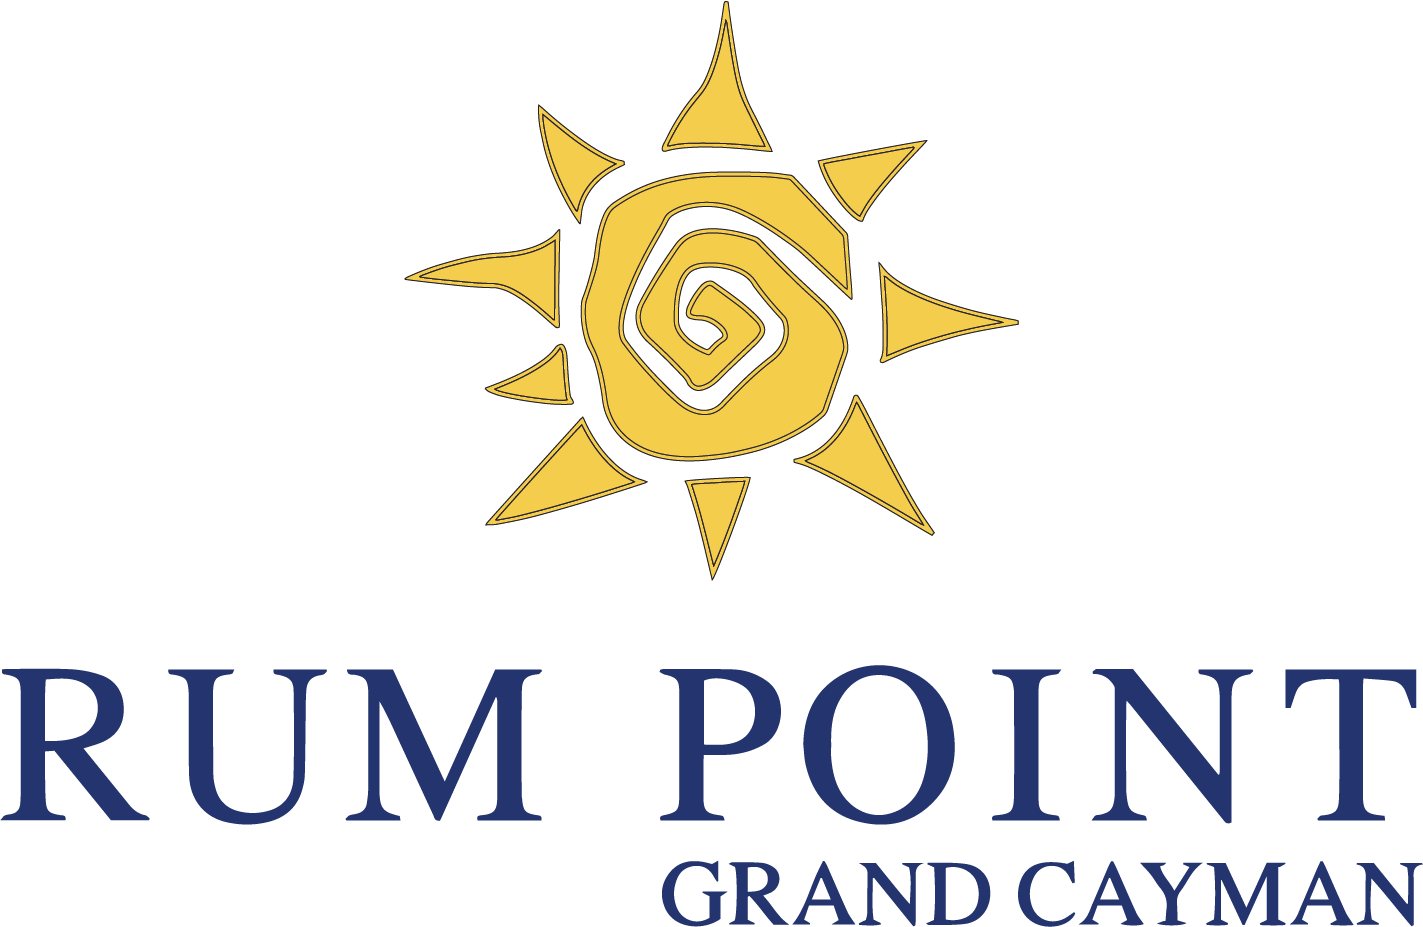 Rum Point Club logo in Grand Cayman.